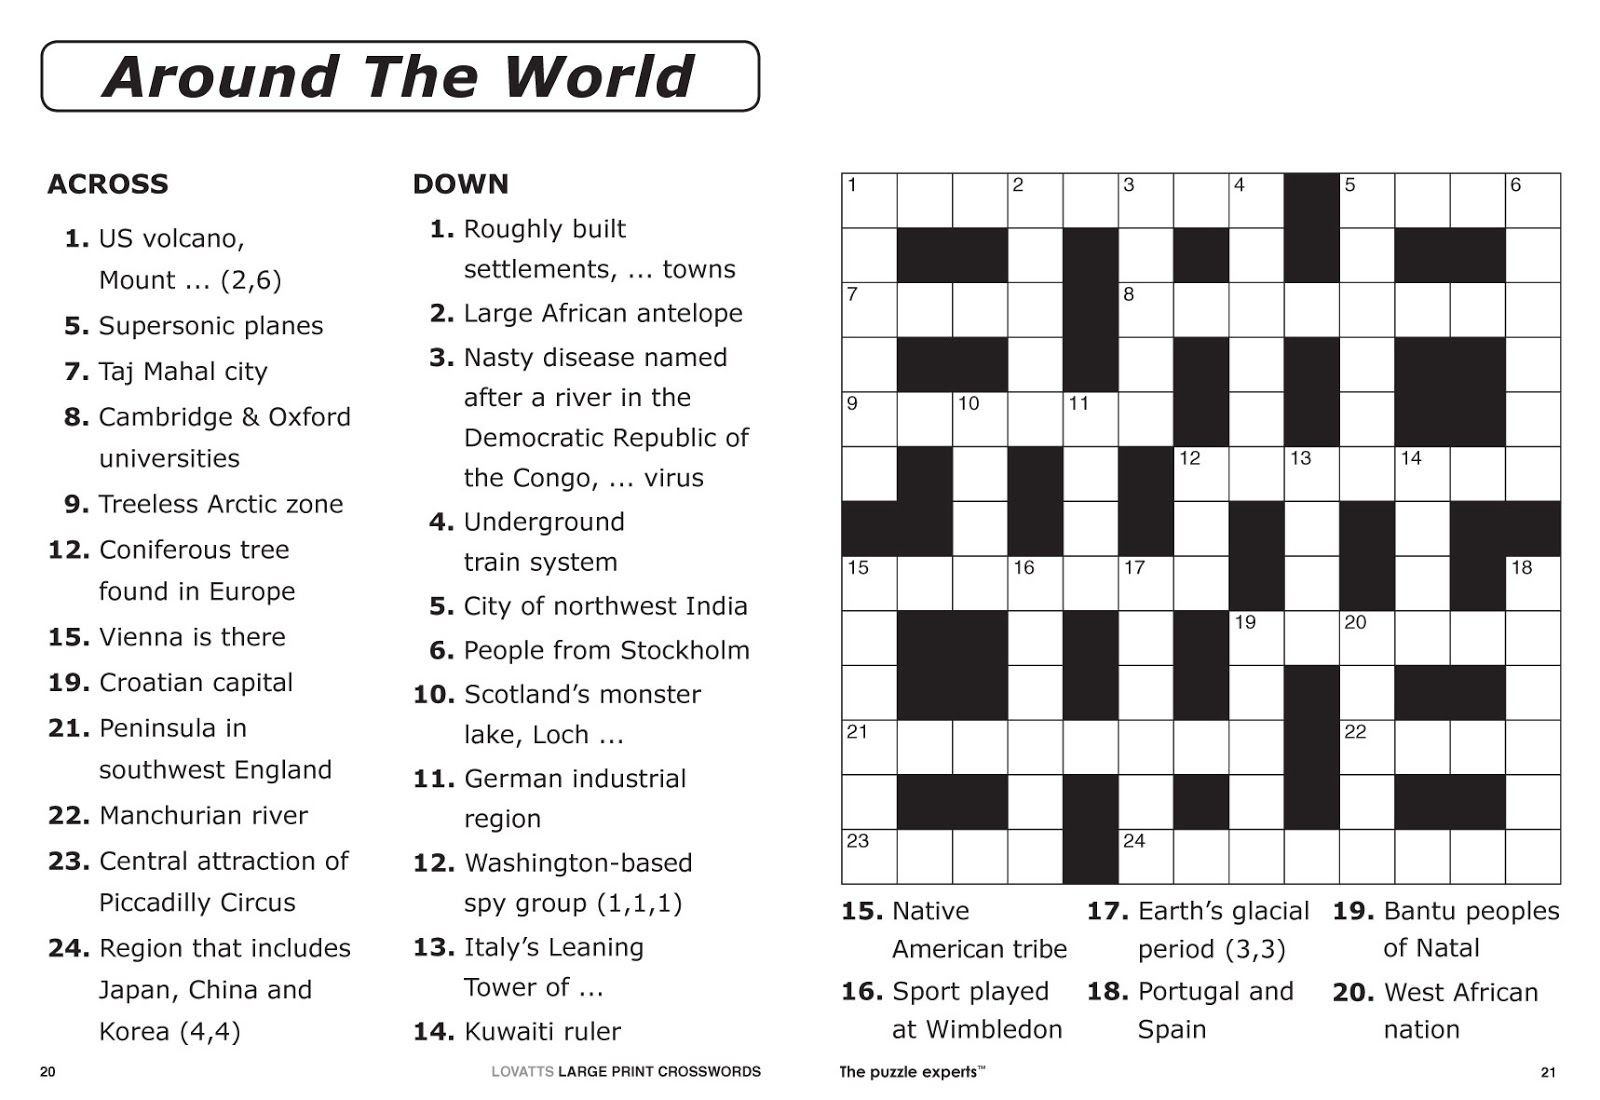 Free Printable Large Print Crossword Puzzles | M3U8 - Free Online Printable Crossword Puzzles